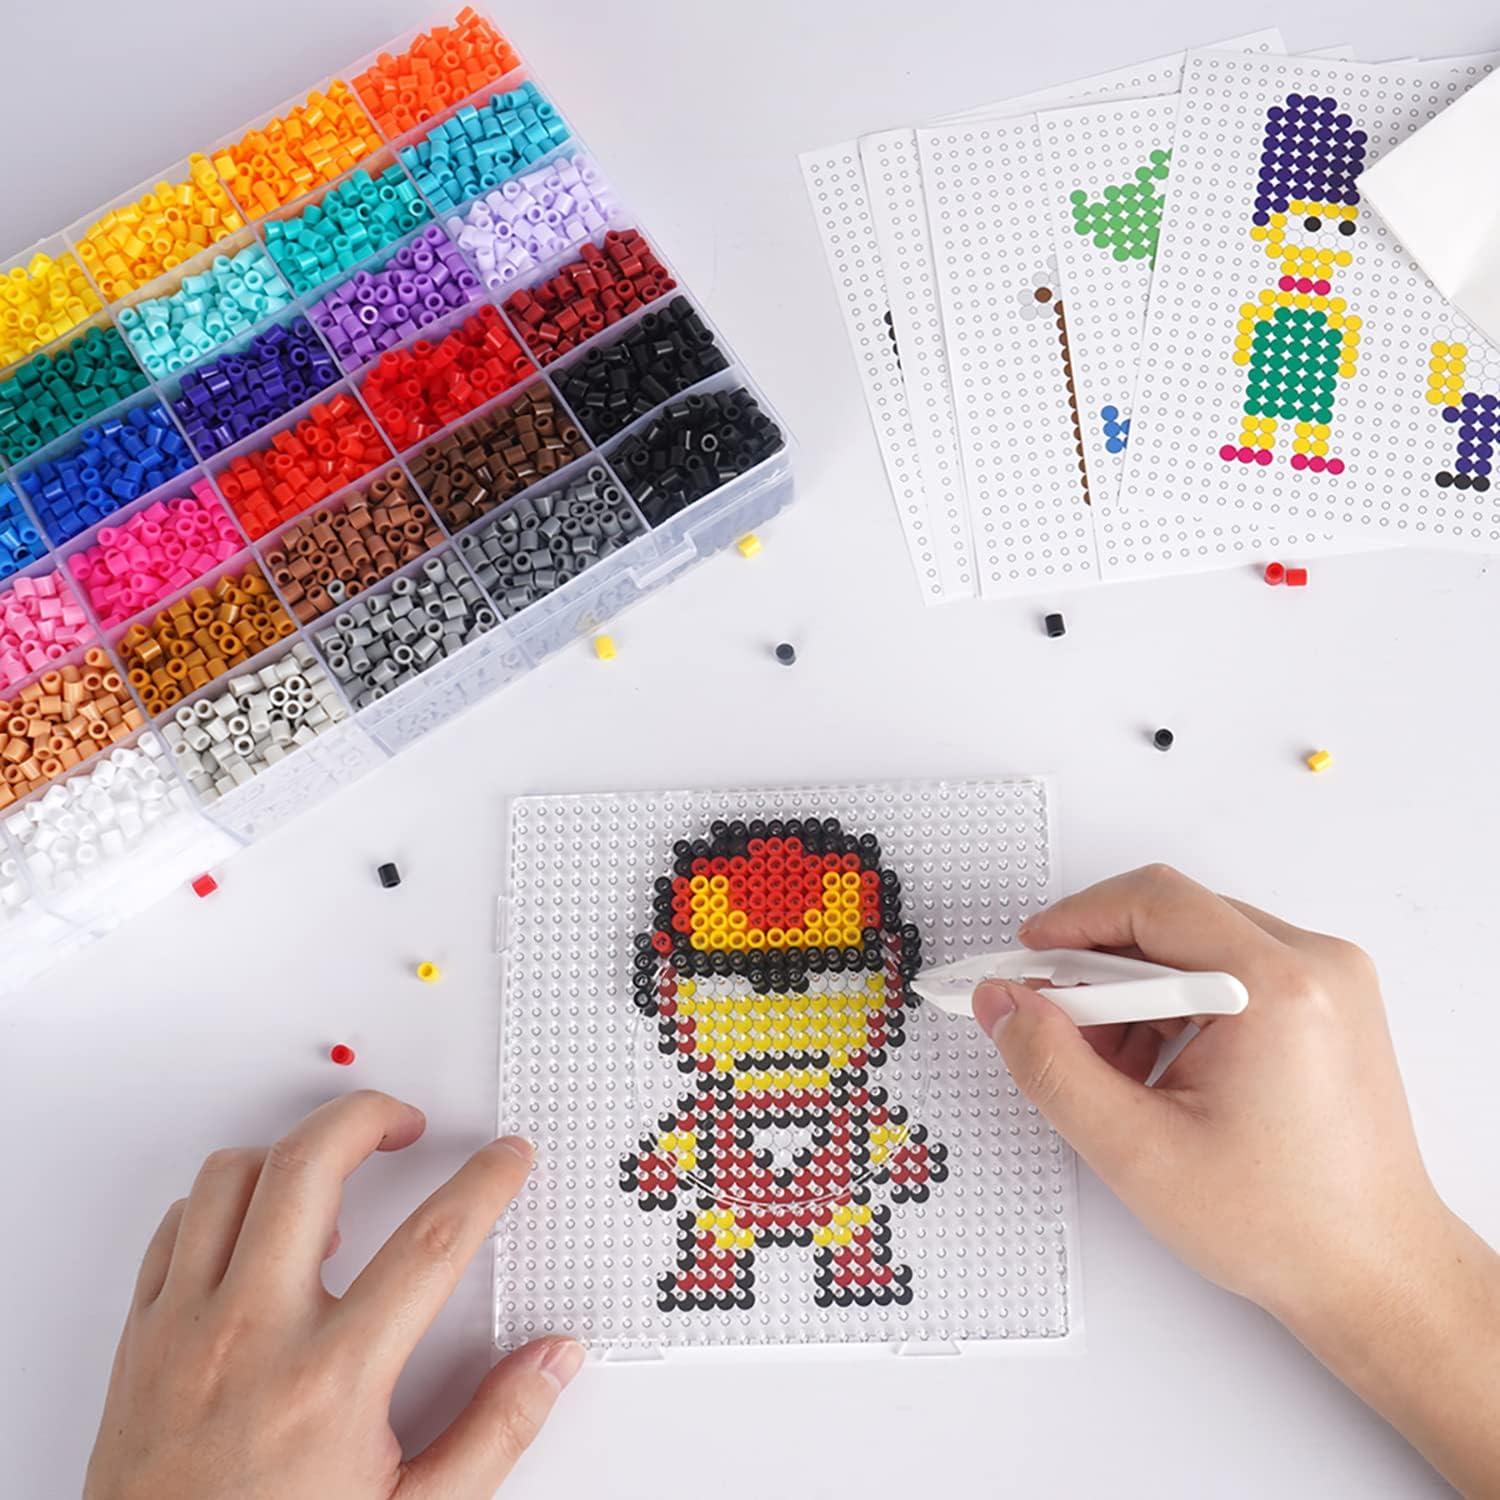 DIY Minecraft Perler Bead Kits New Designs Just Added 